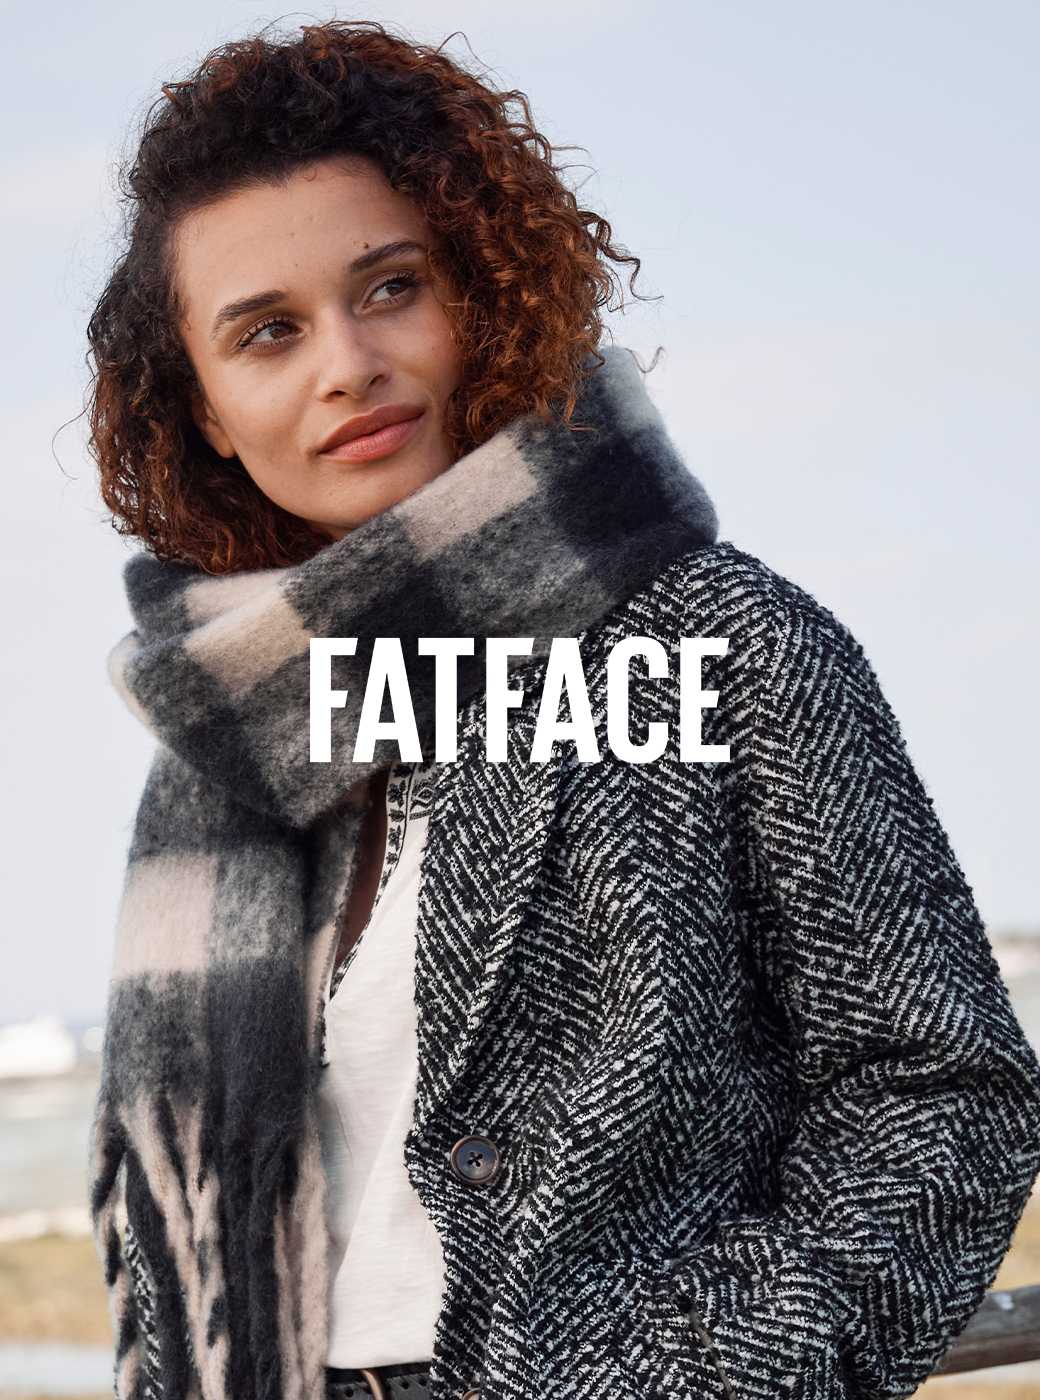 Shop Fatface.